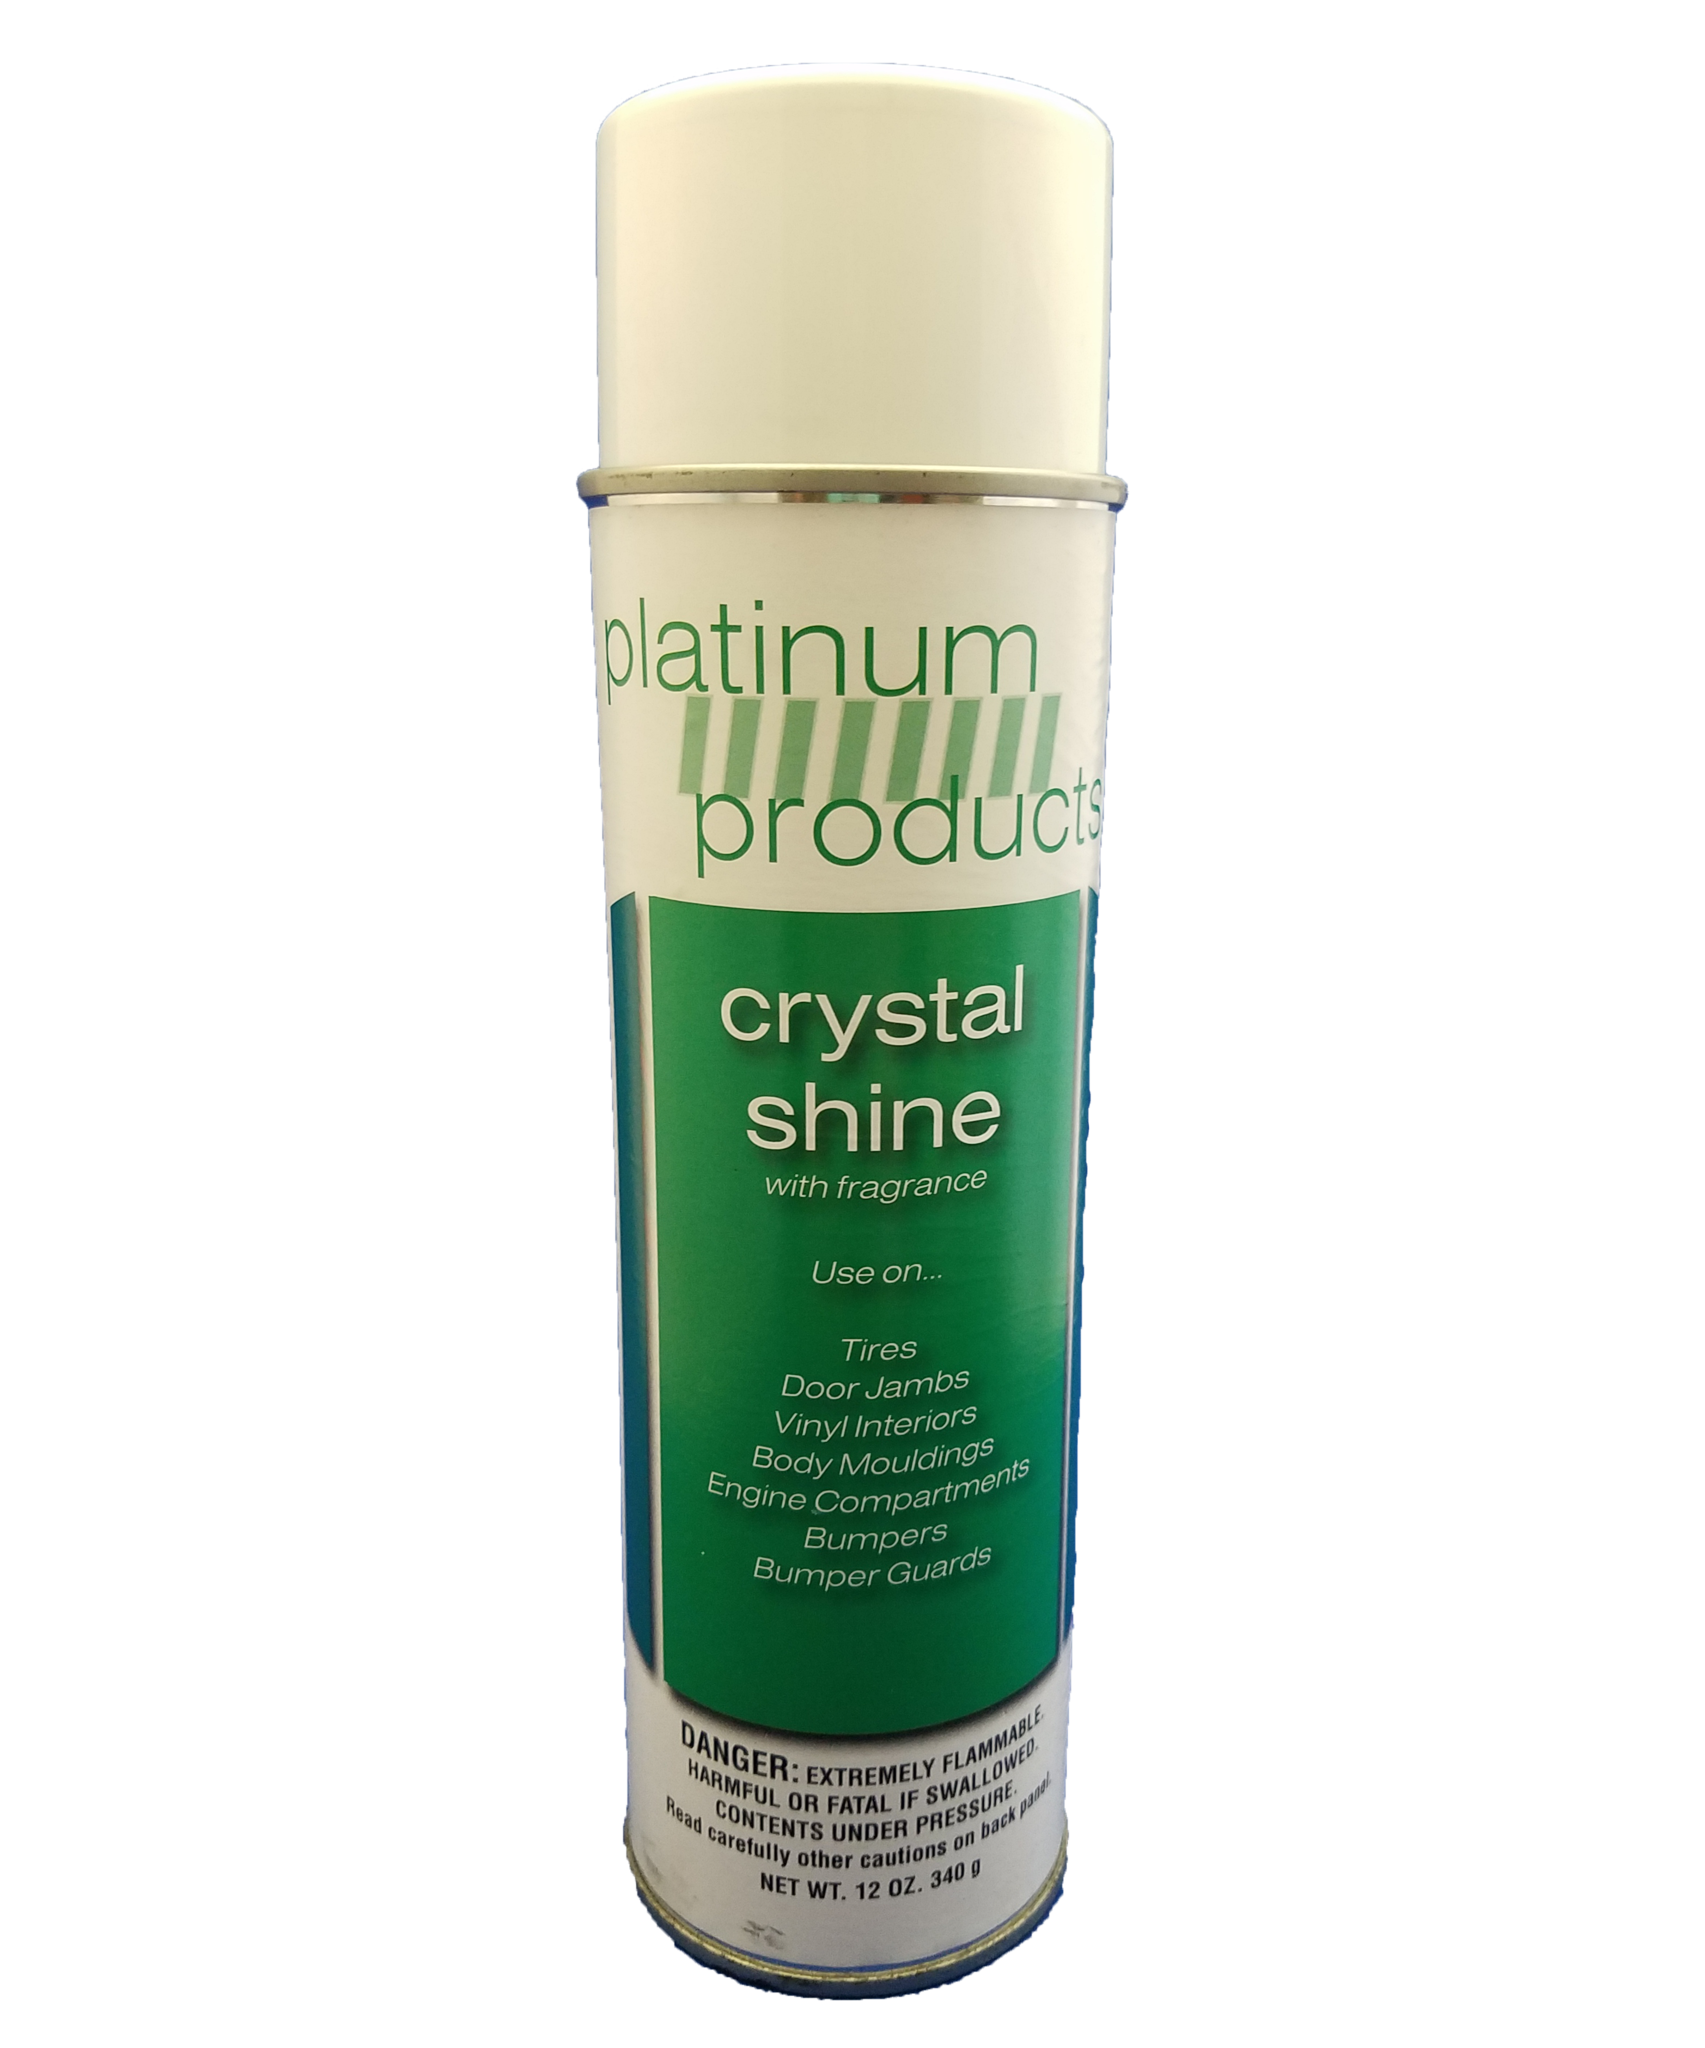 Platinum Products: Crystal Shine final detailer. Aerosol 12oz. detail spray.